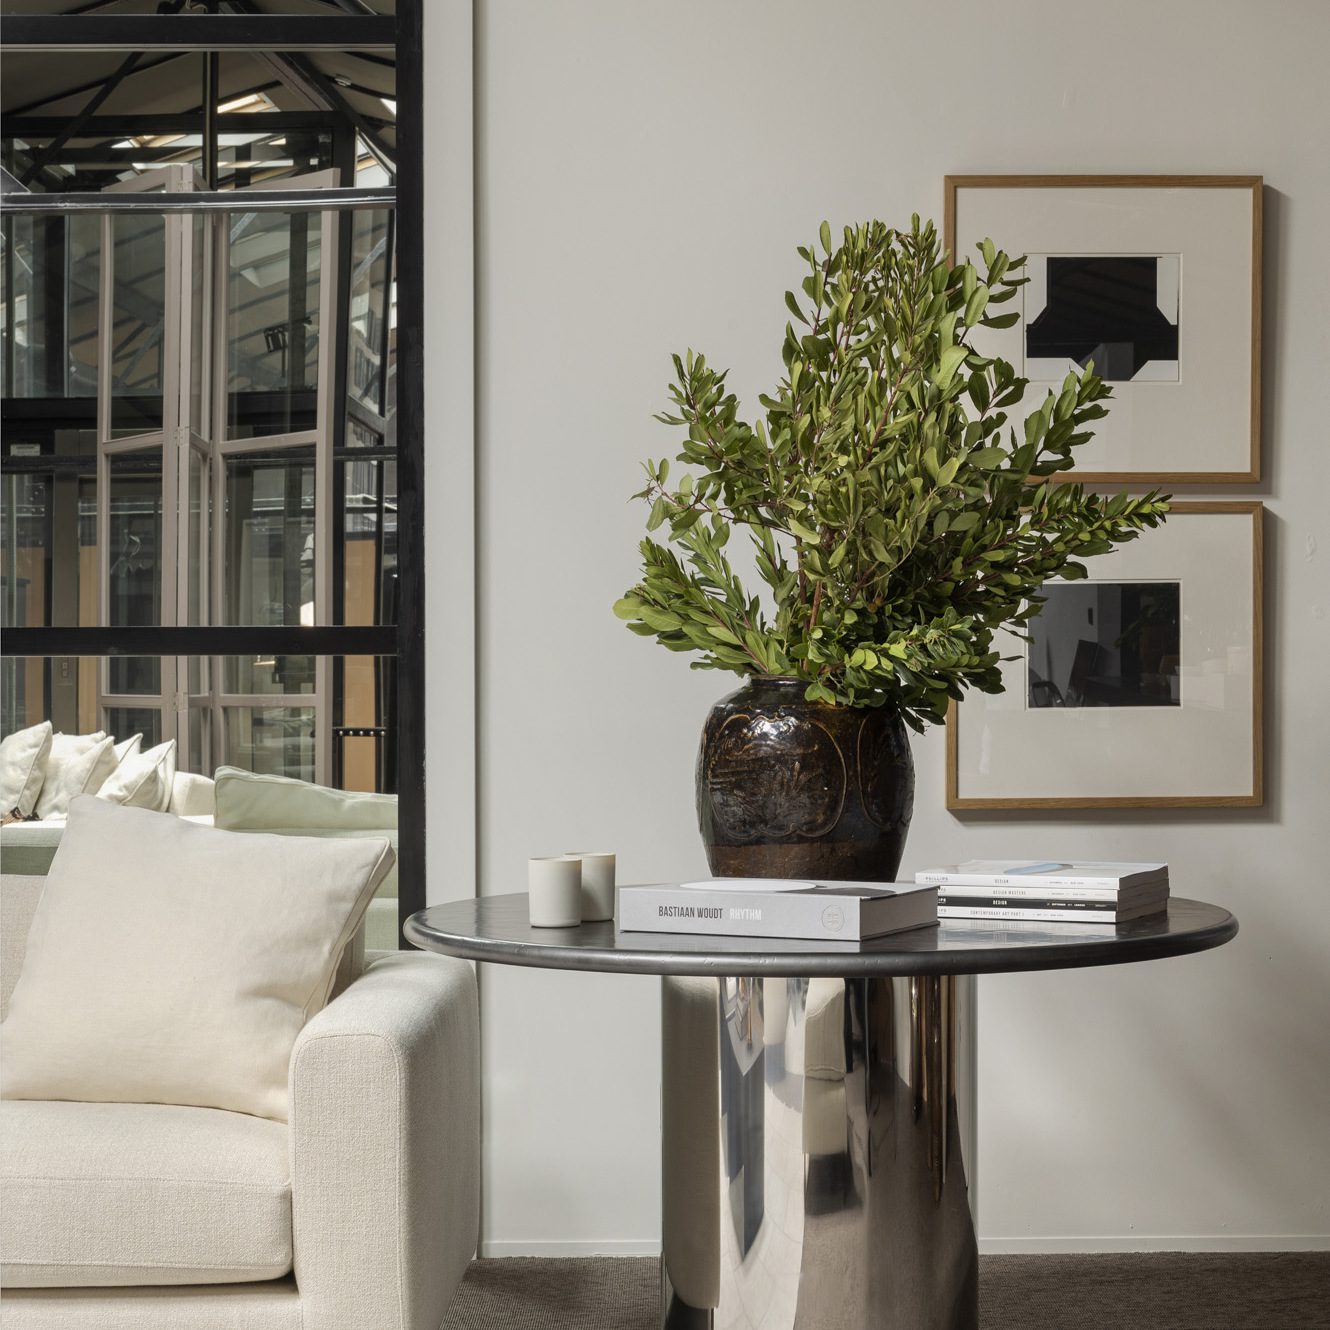 SAV pitch black interior design architecture product furniture luxury modern sophisticated elegant decor mix&match fiber stainless steel dining area